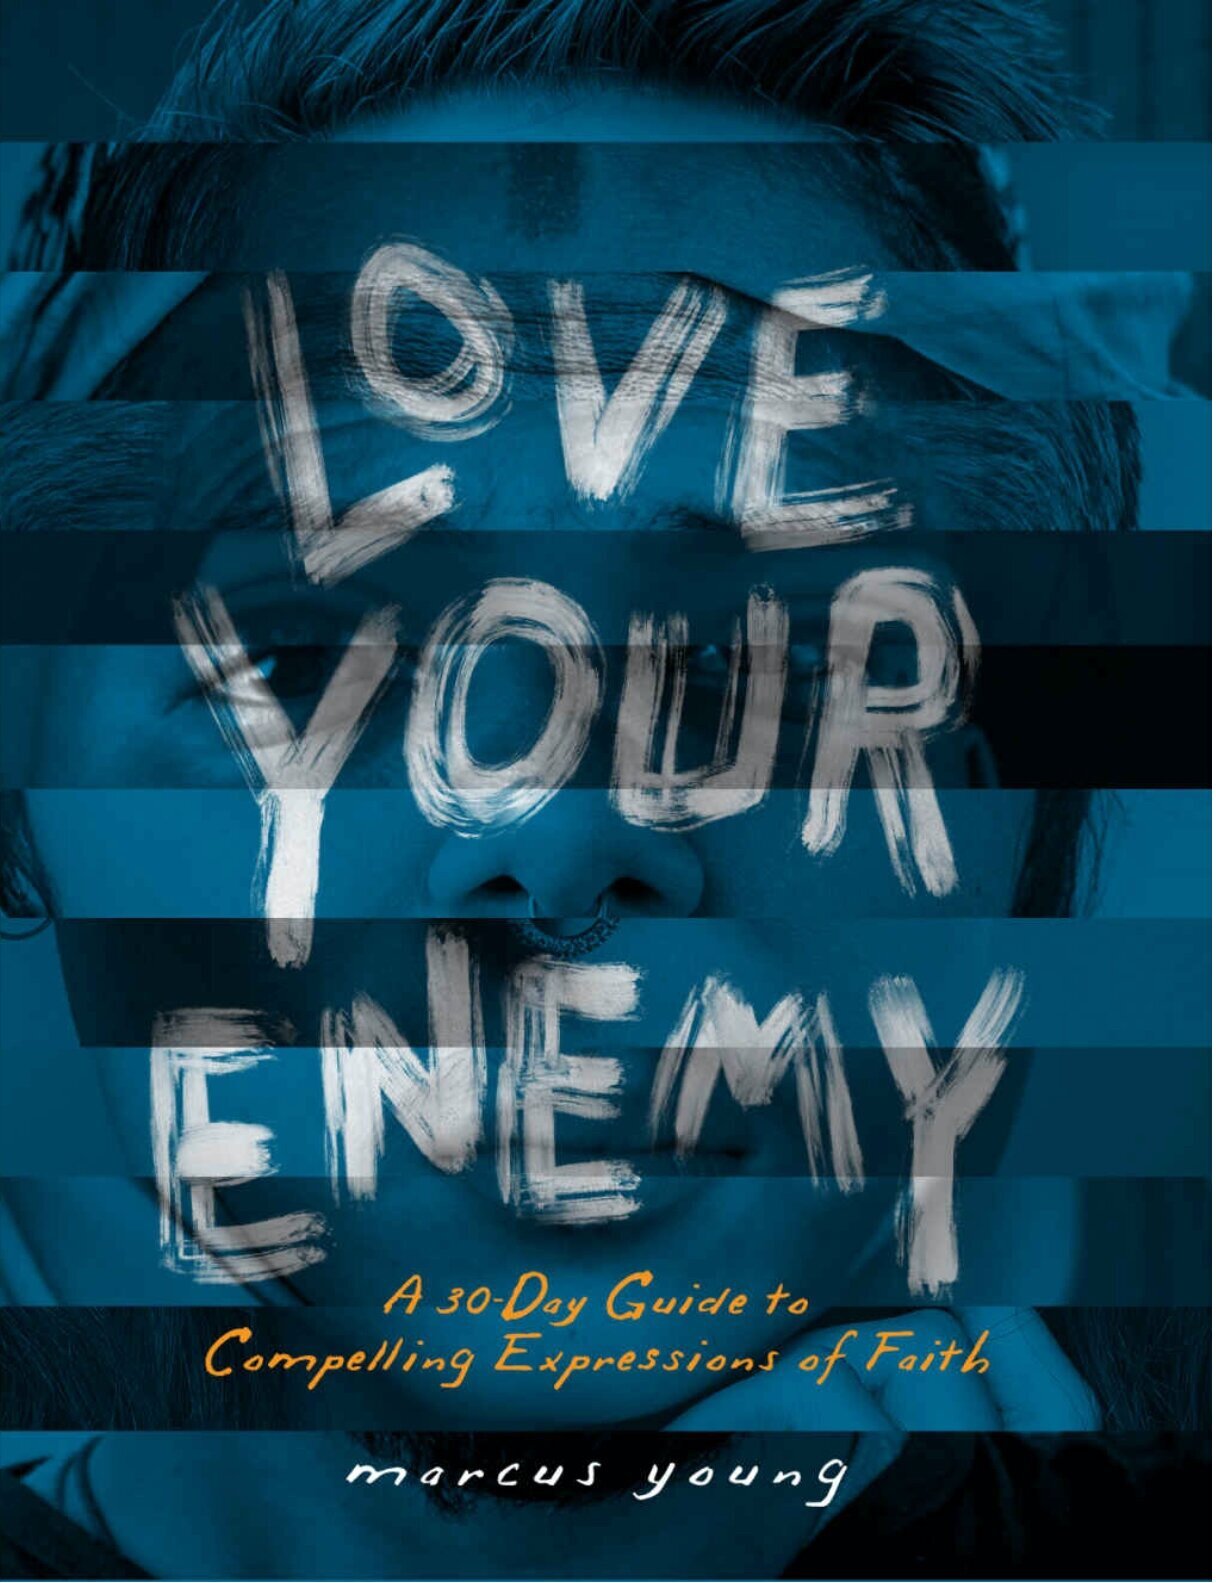  - Love Your Enemy on Amazon: https://amzn.to/358Iv62